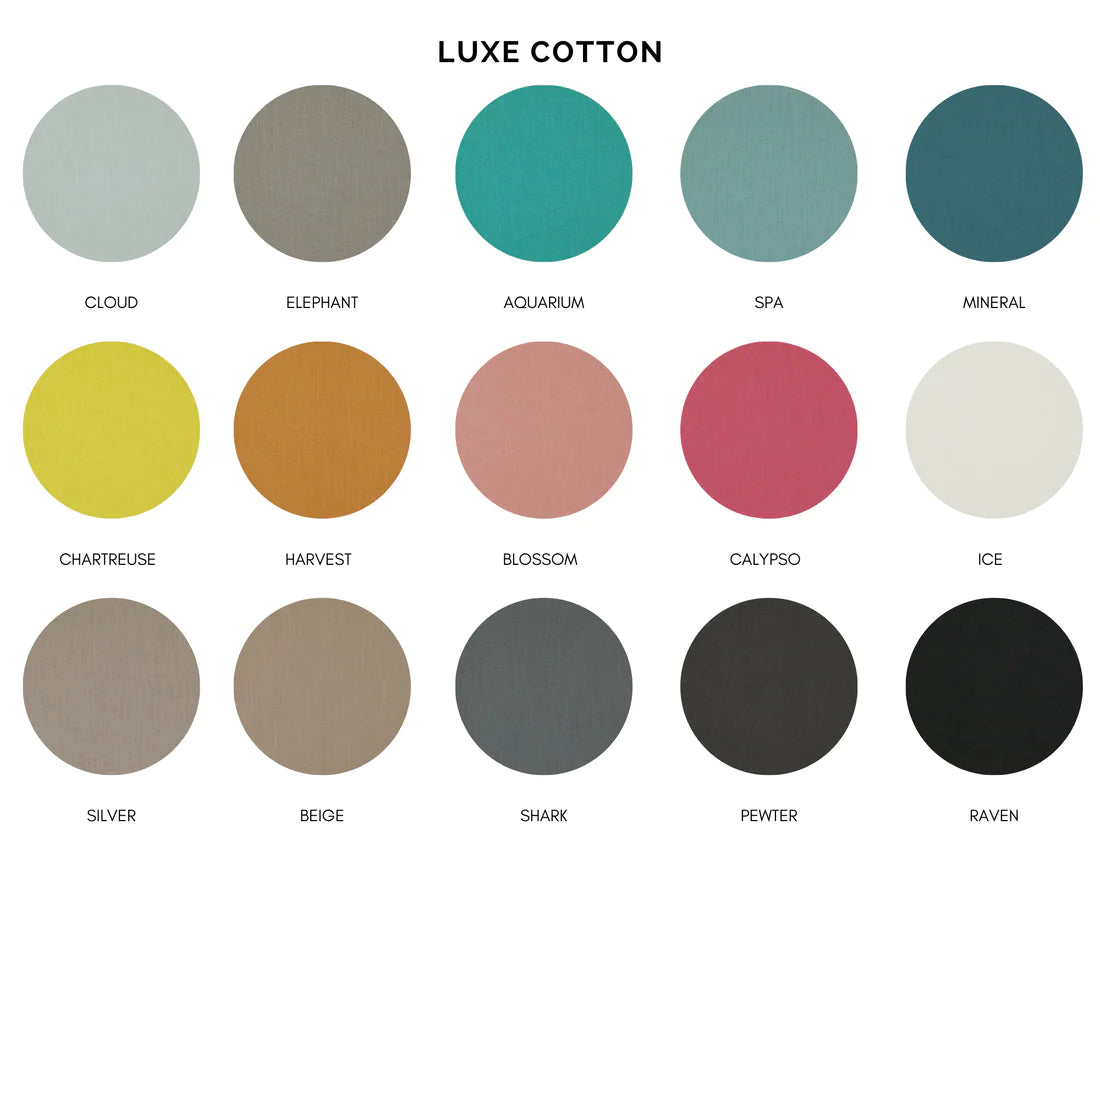 Chelsea Headboard - Luxe Cotton Fabric